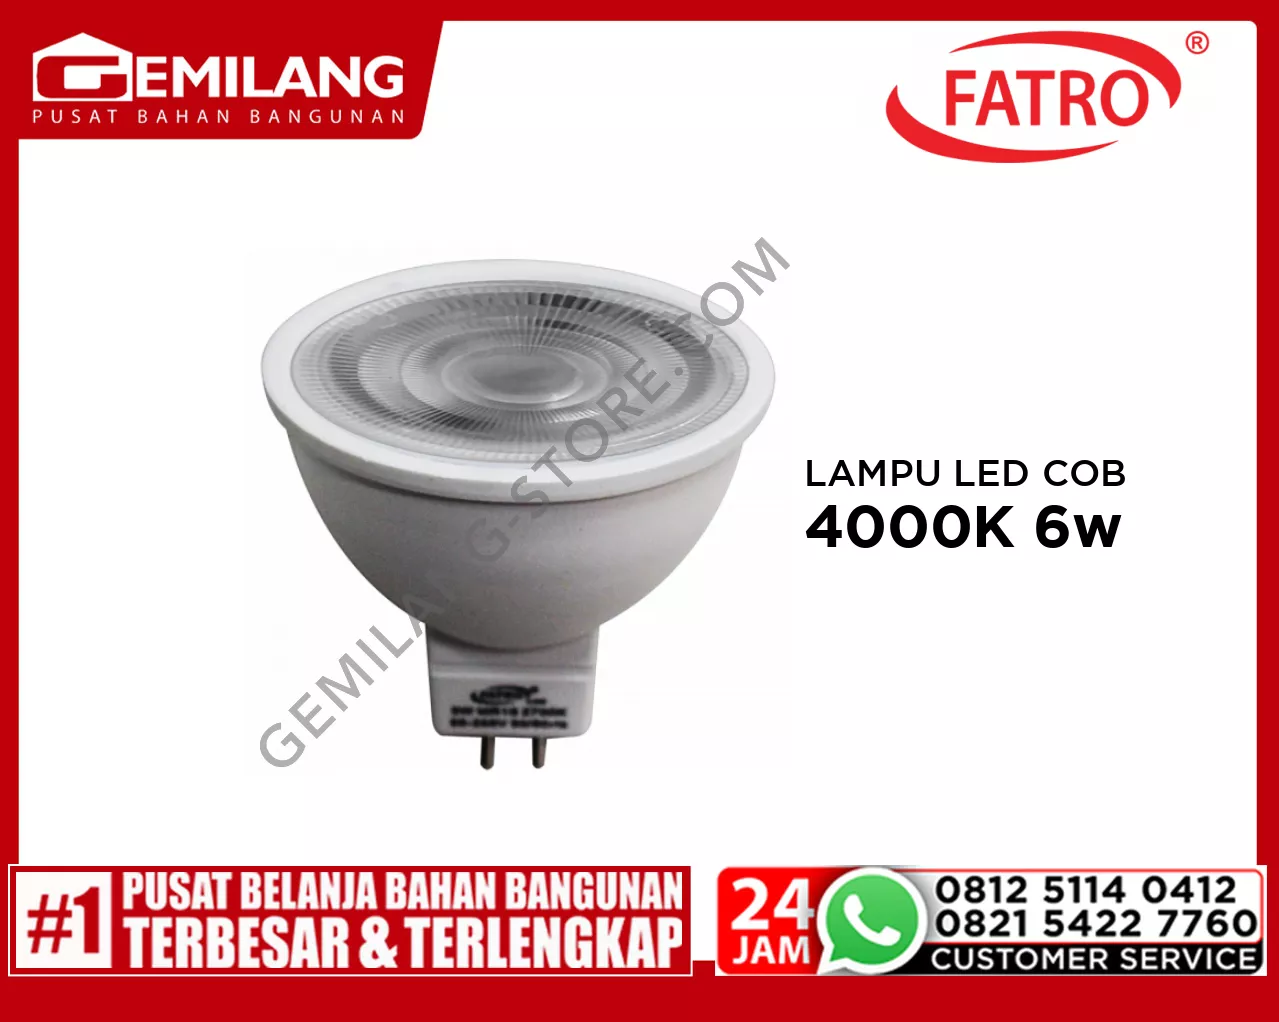 FATRO LAMPU LED COB MR16 4000K 6w